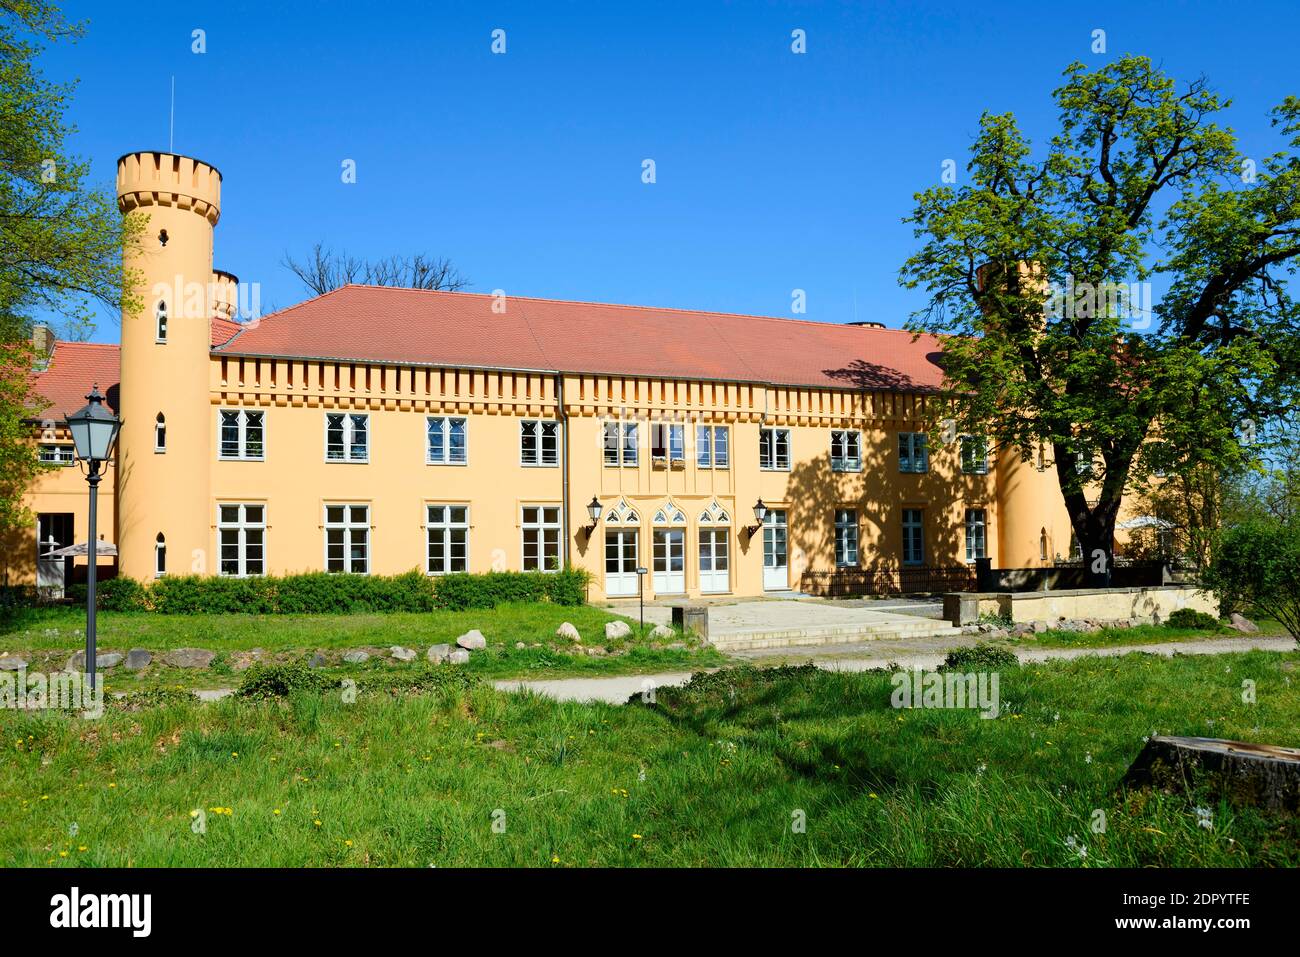 Manor house, Petzow Castle, Werder, Brandenburg, Germany Stock Photo